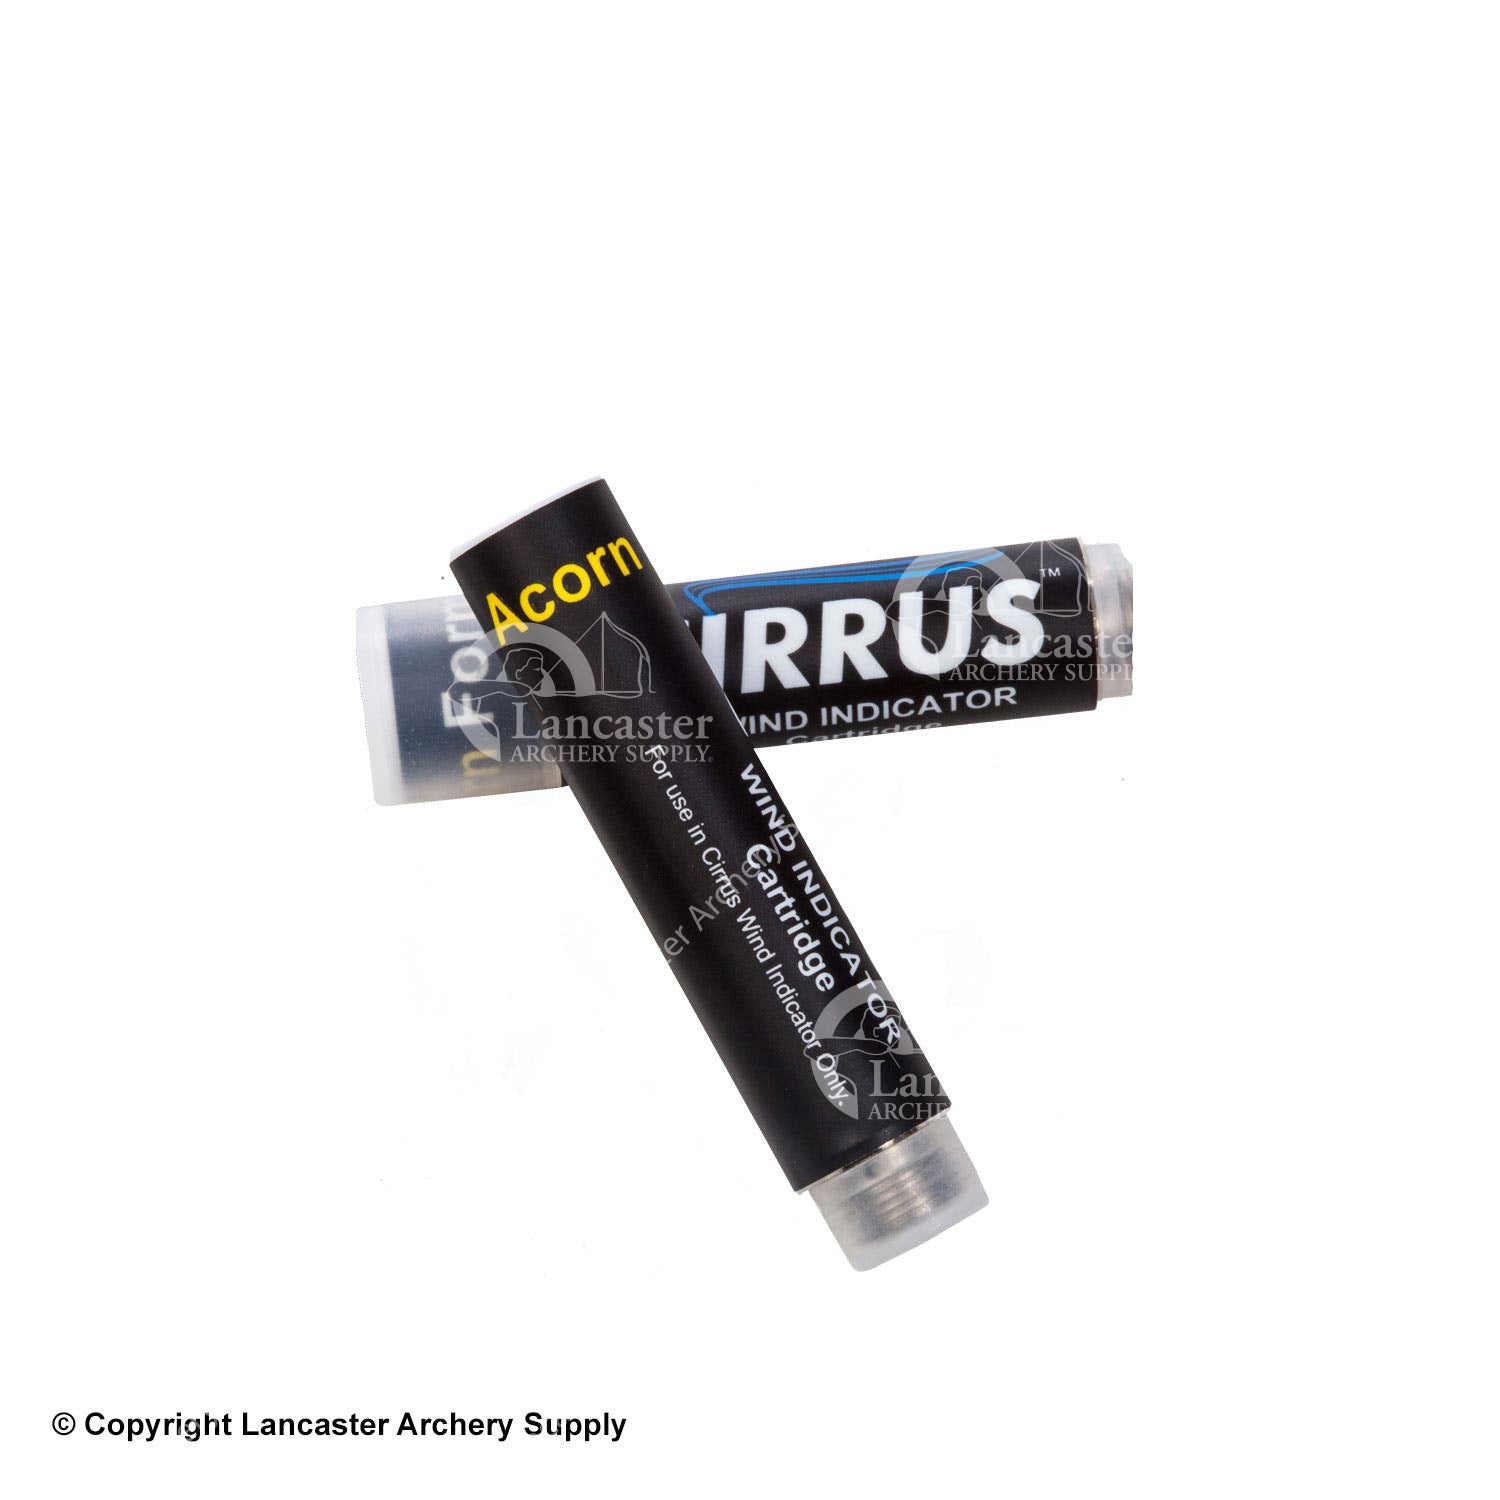 Cirrus Wind Indicator Replacement Cartridges